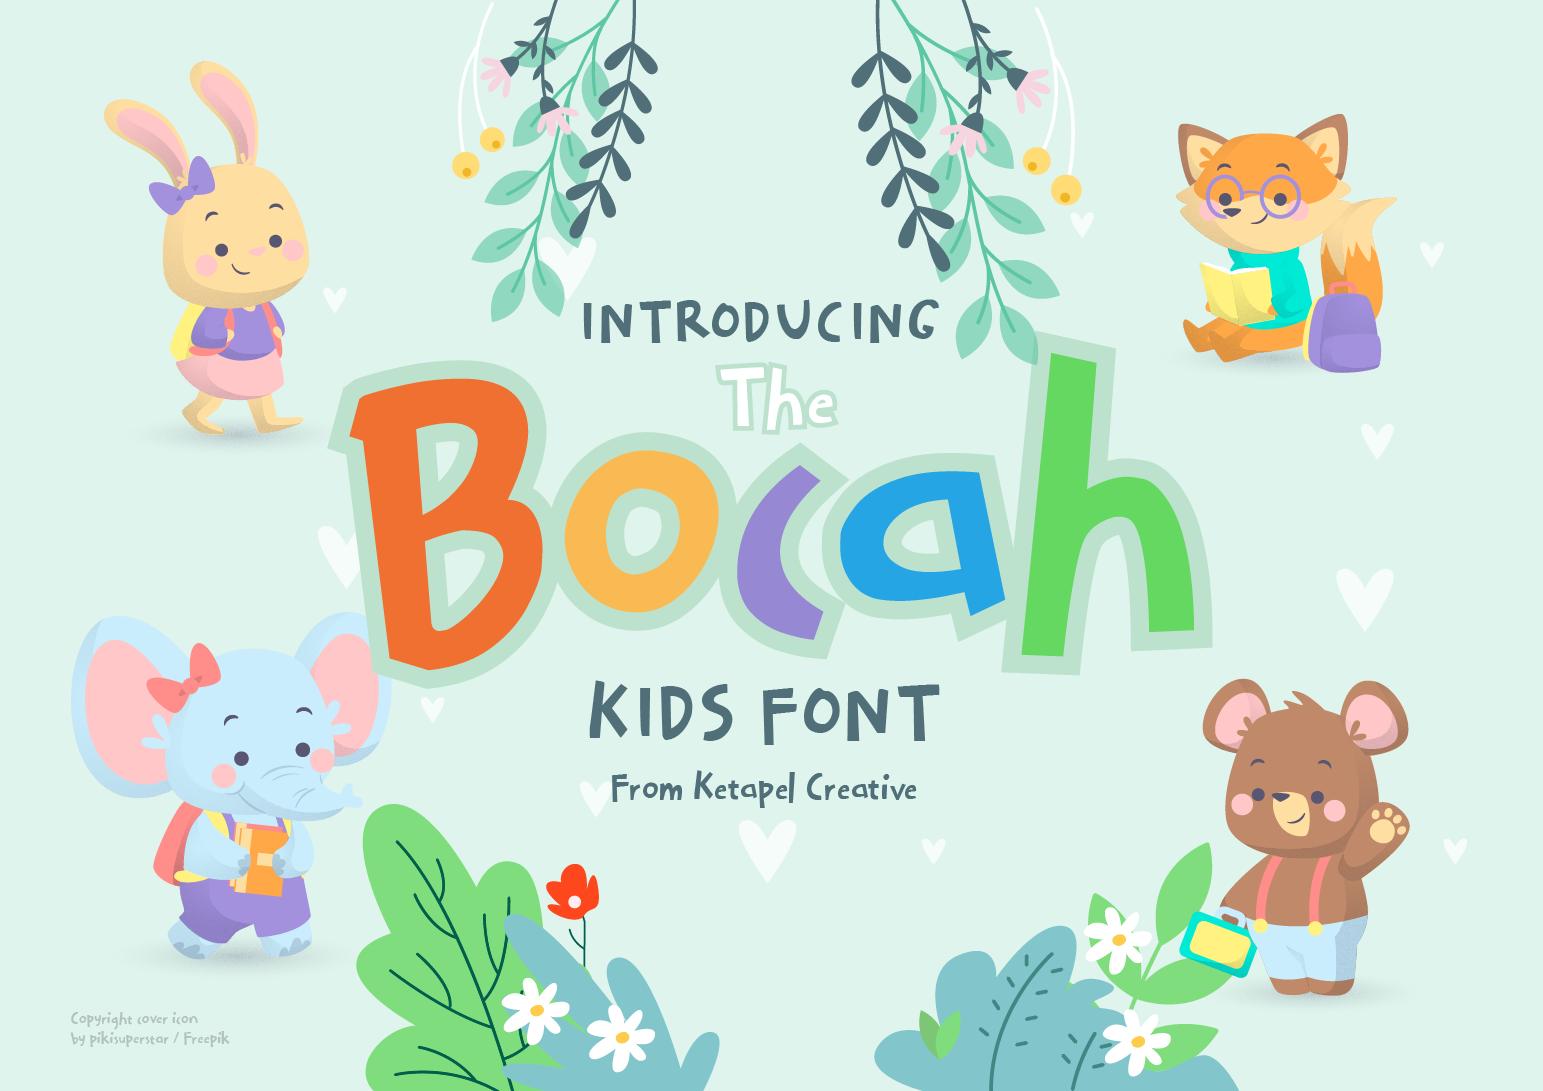 The Bocah Font